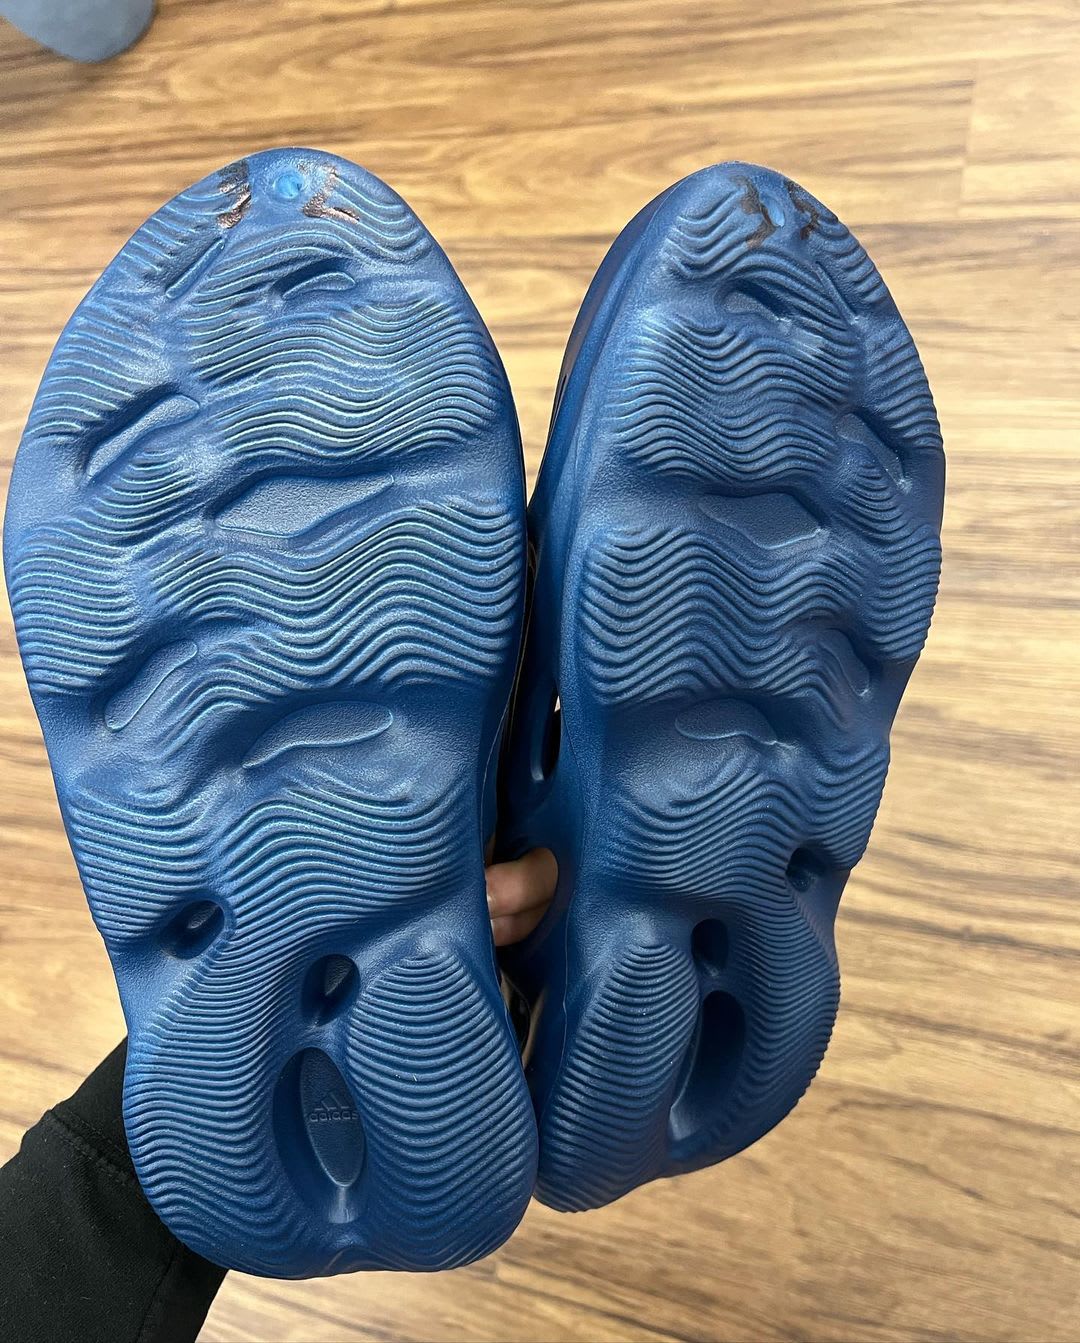 Adidas Yeezy Foam Runner Surfaces in Navy Colorway